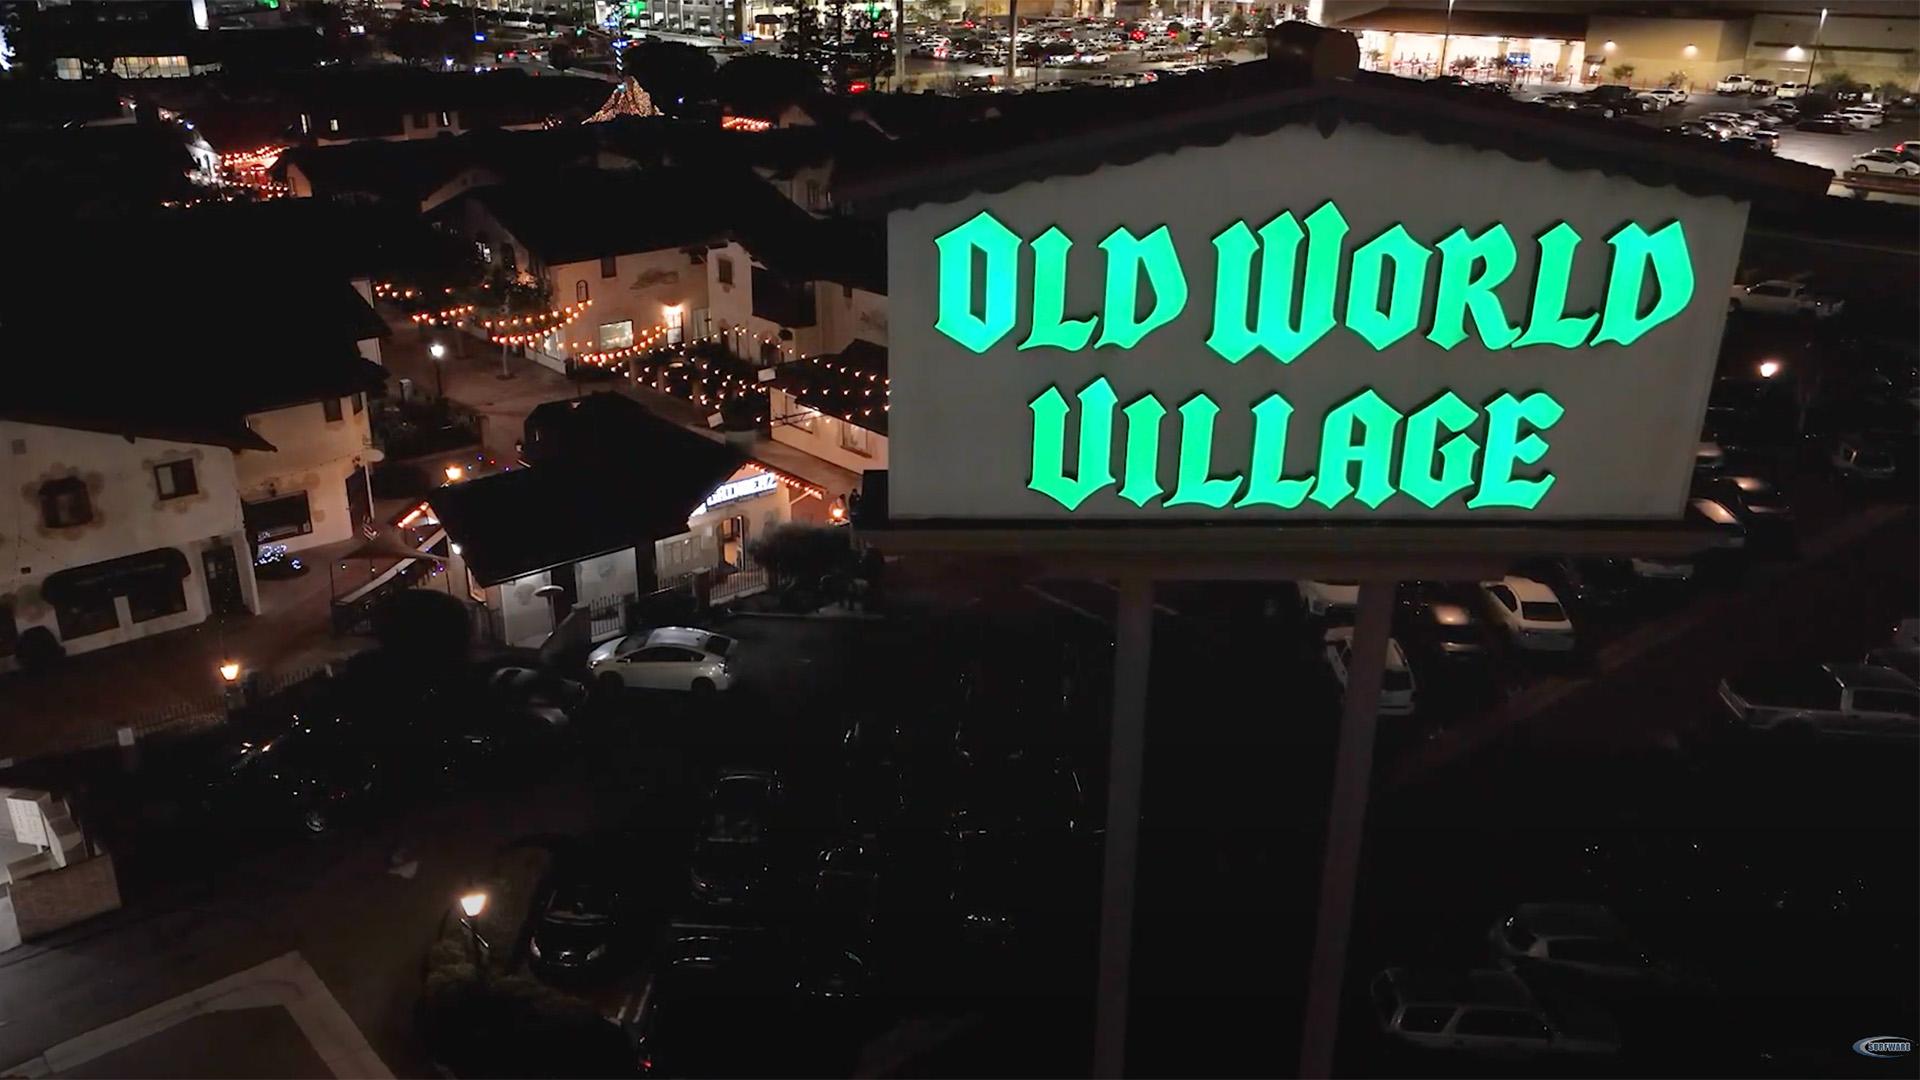 The Old World Village at Night